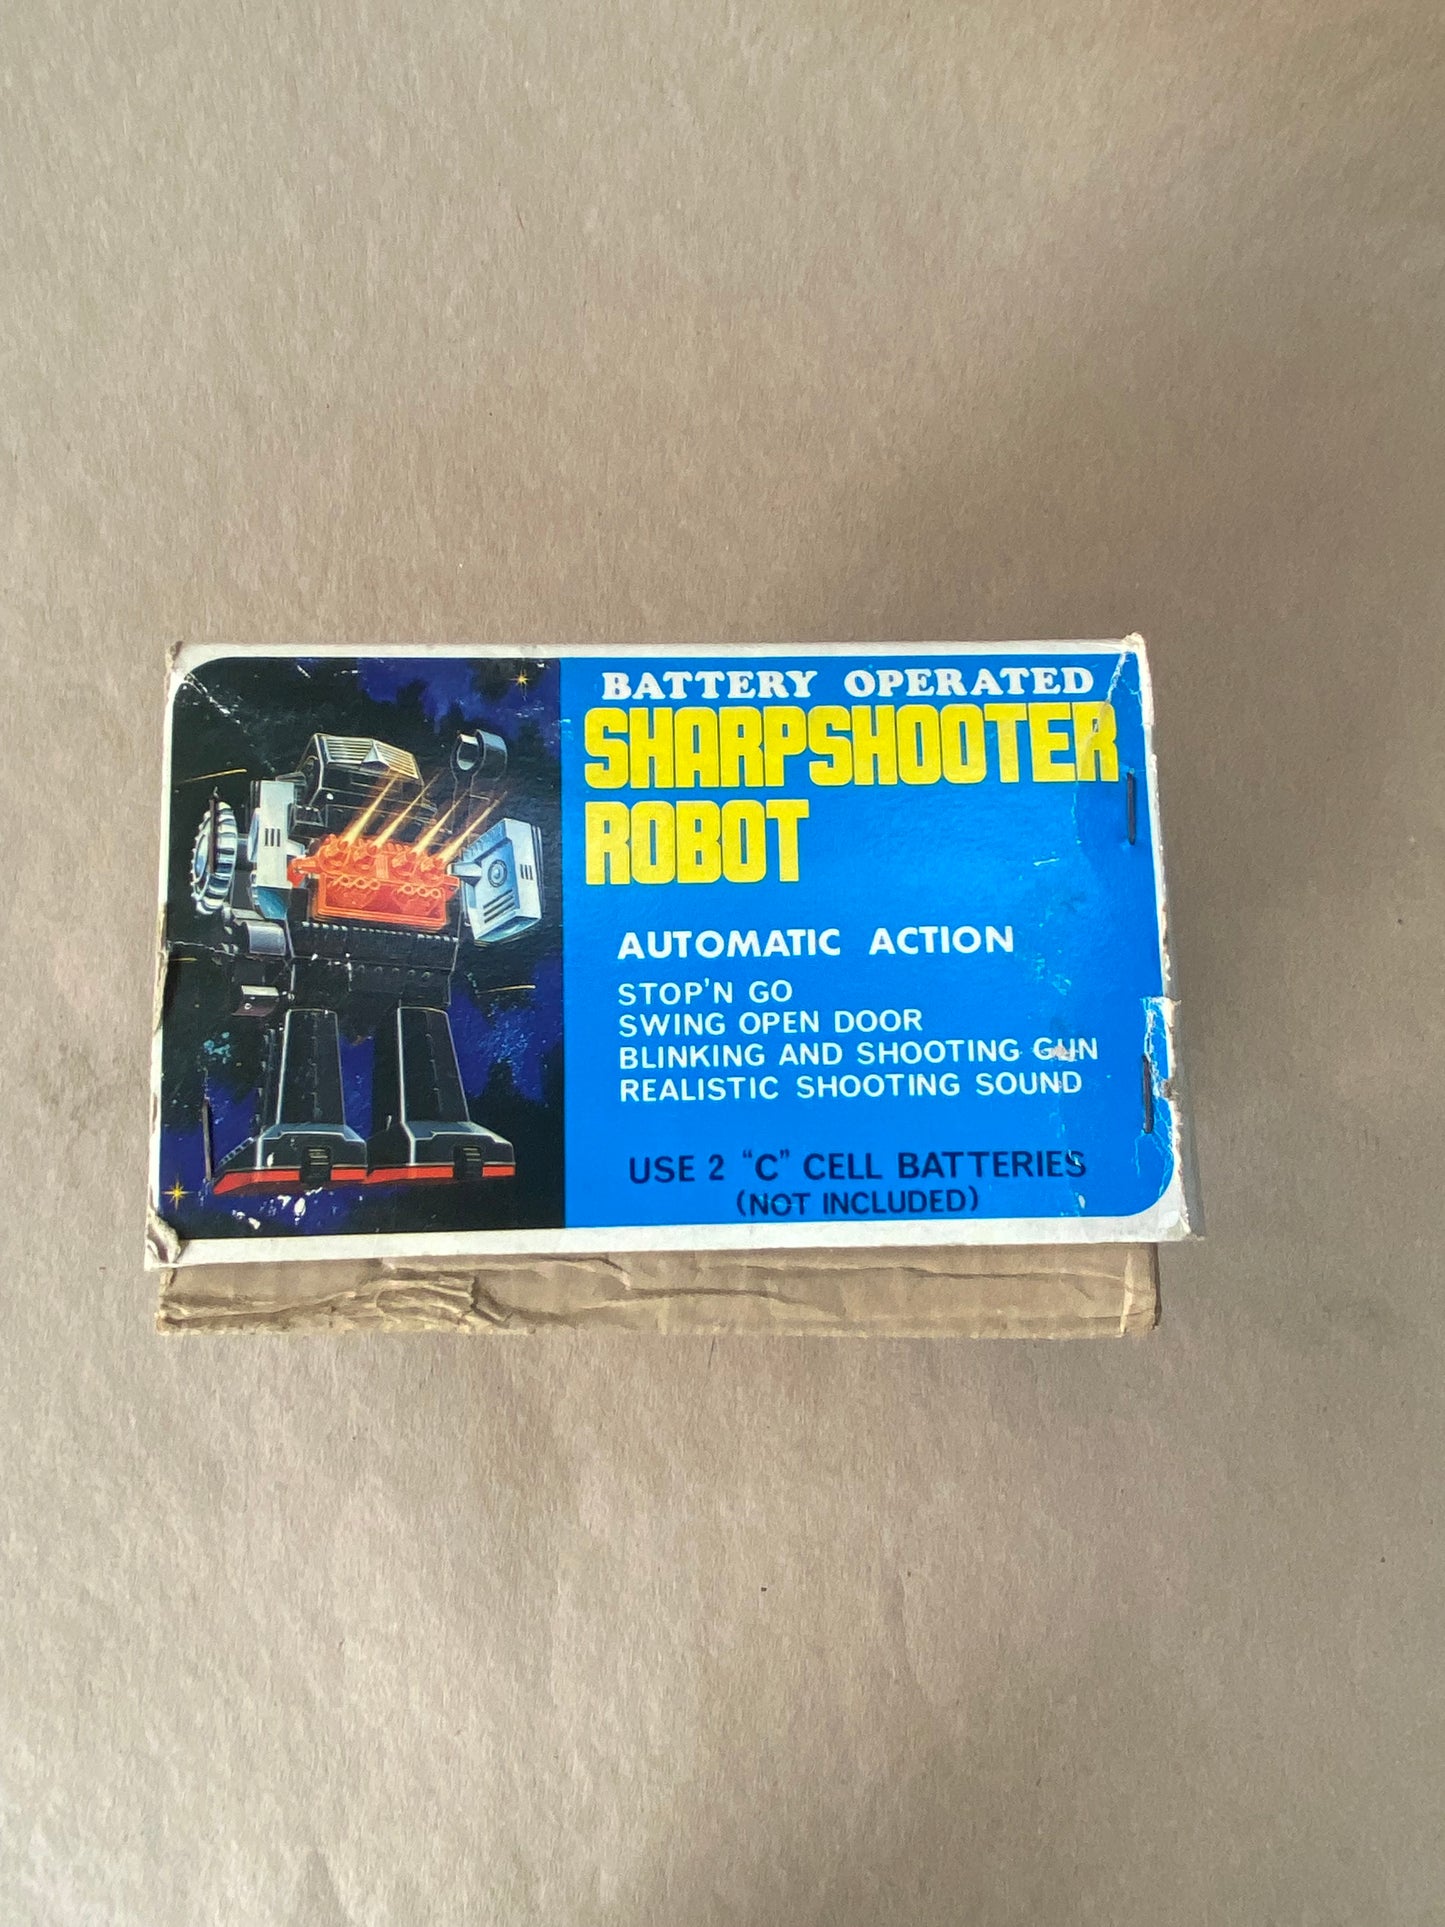 Sharpshooter Robot